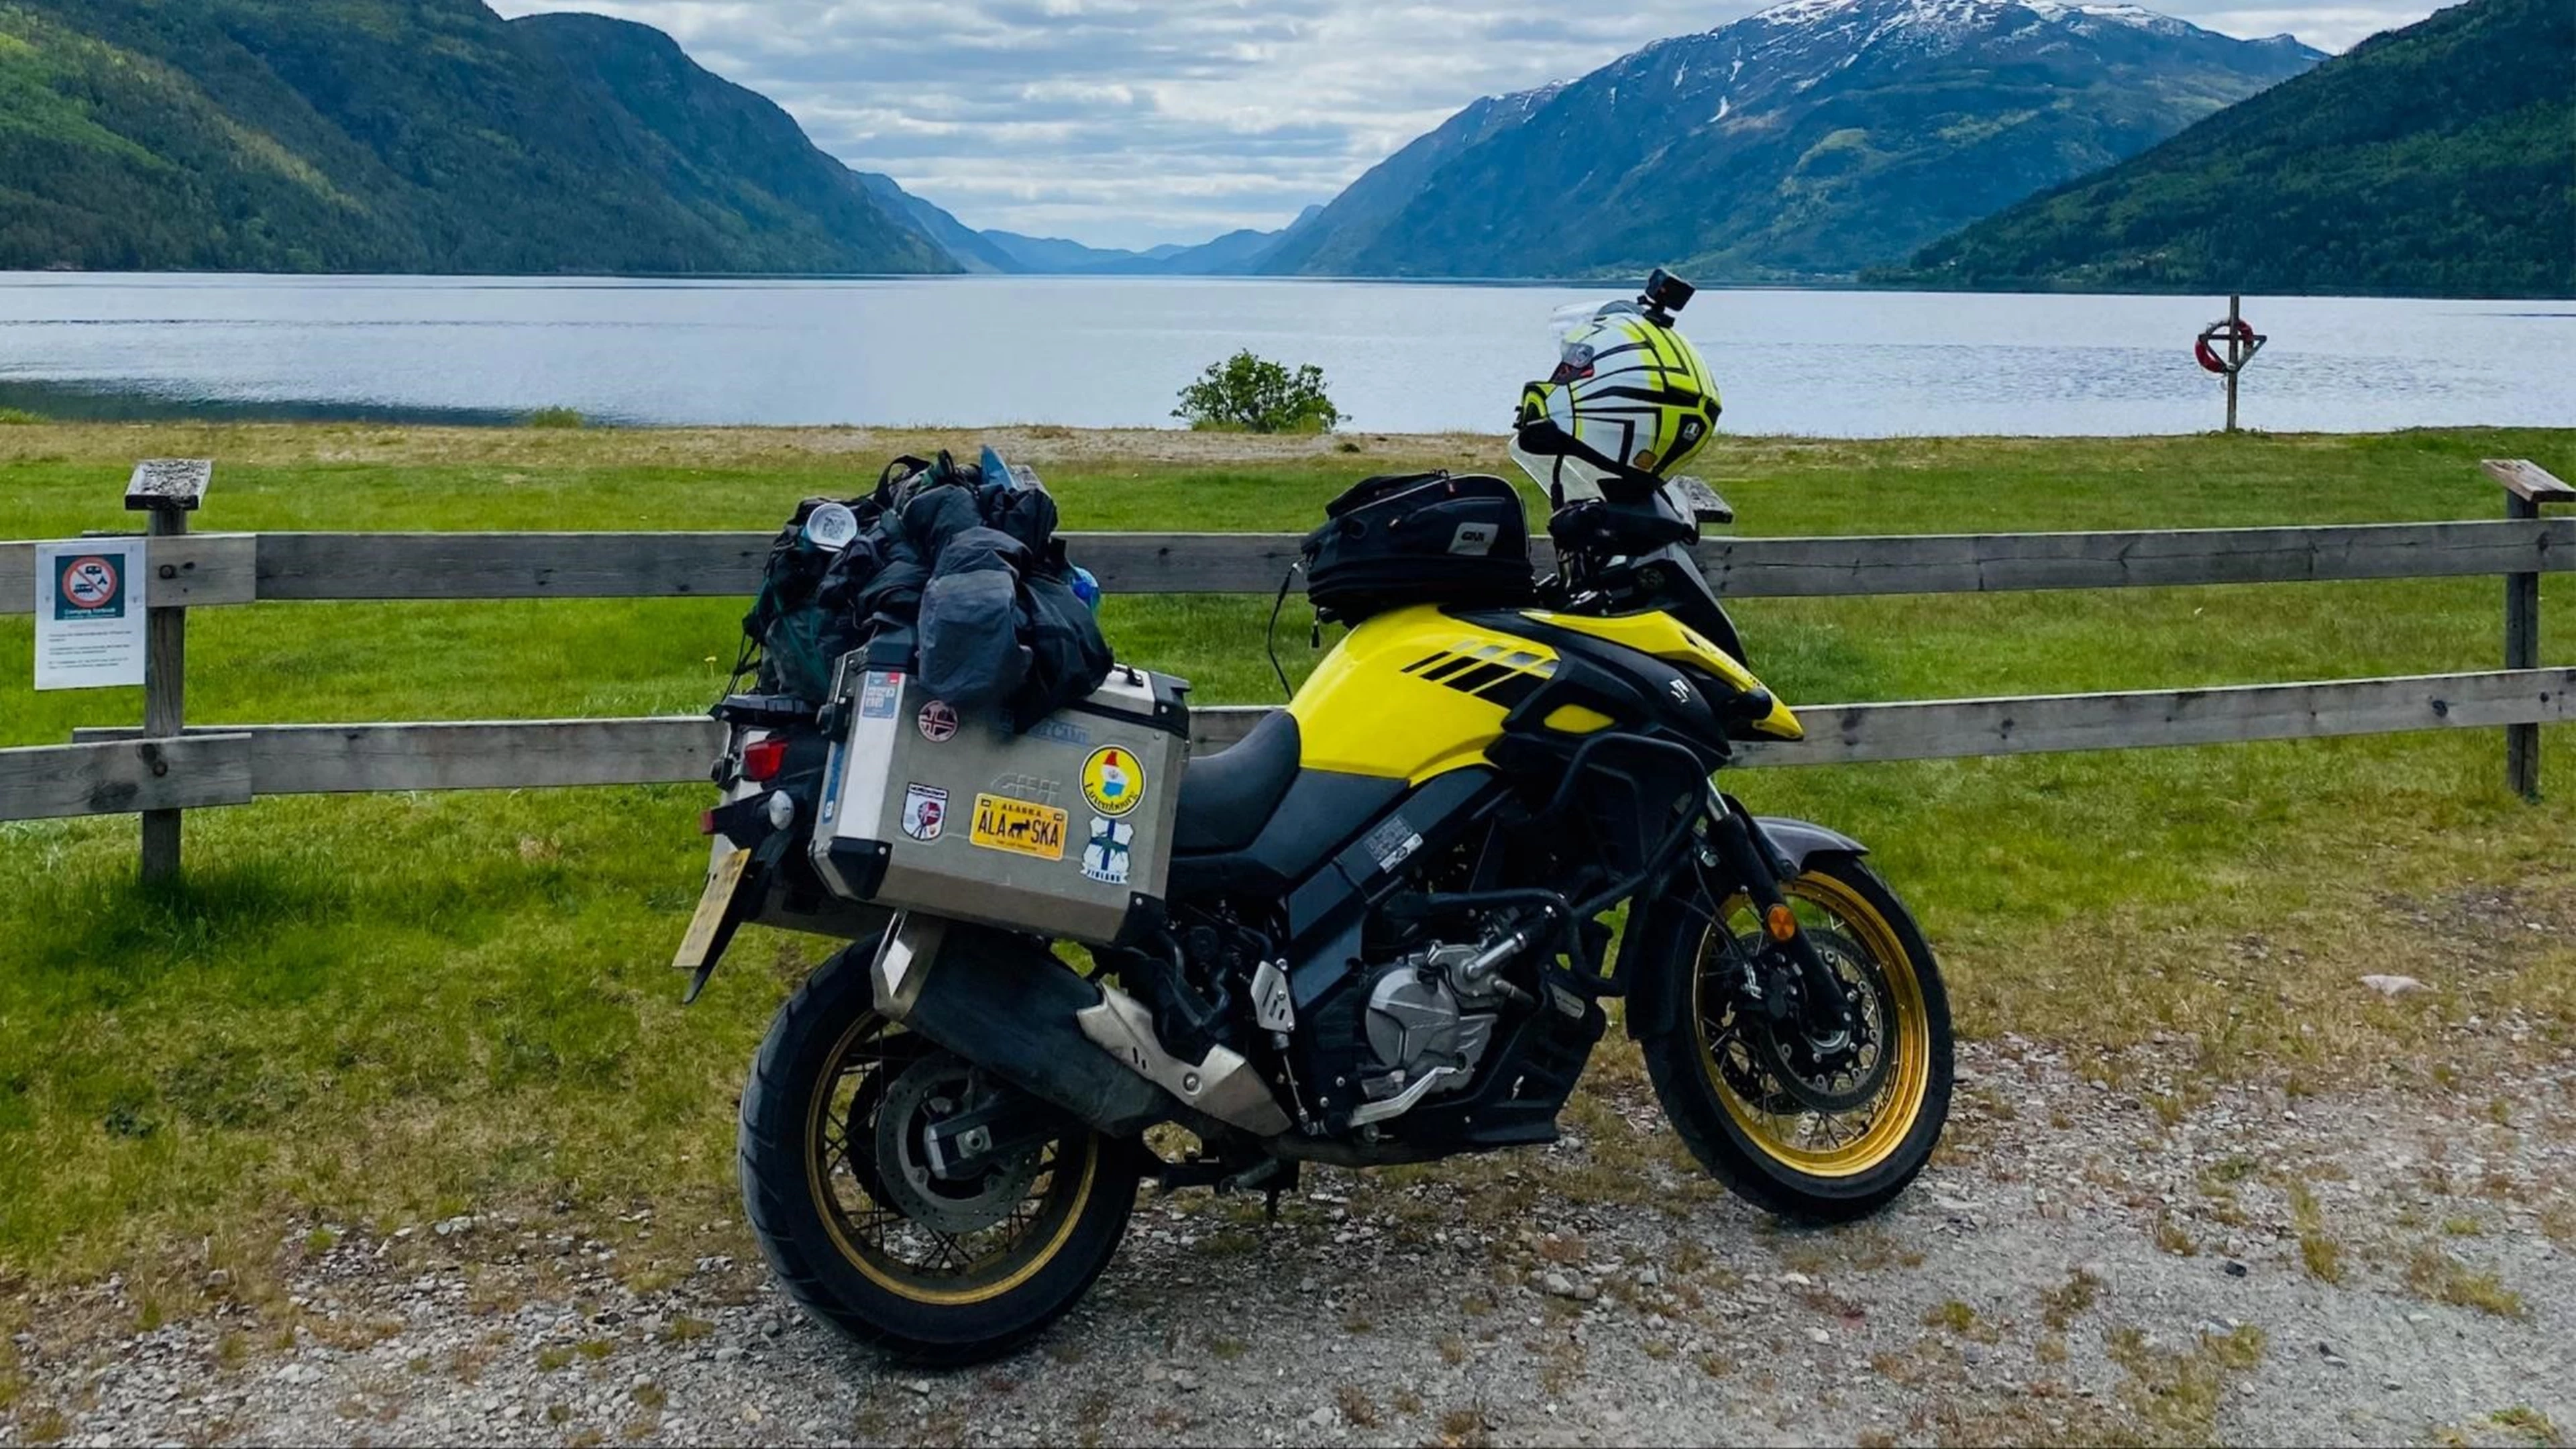 Suzuki Adventure Bike Near Lake